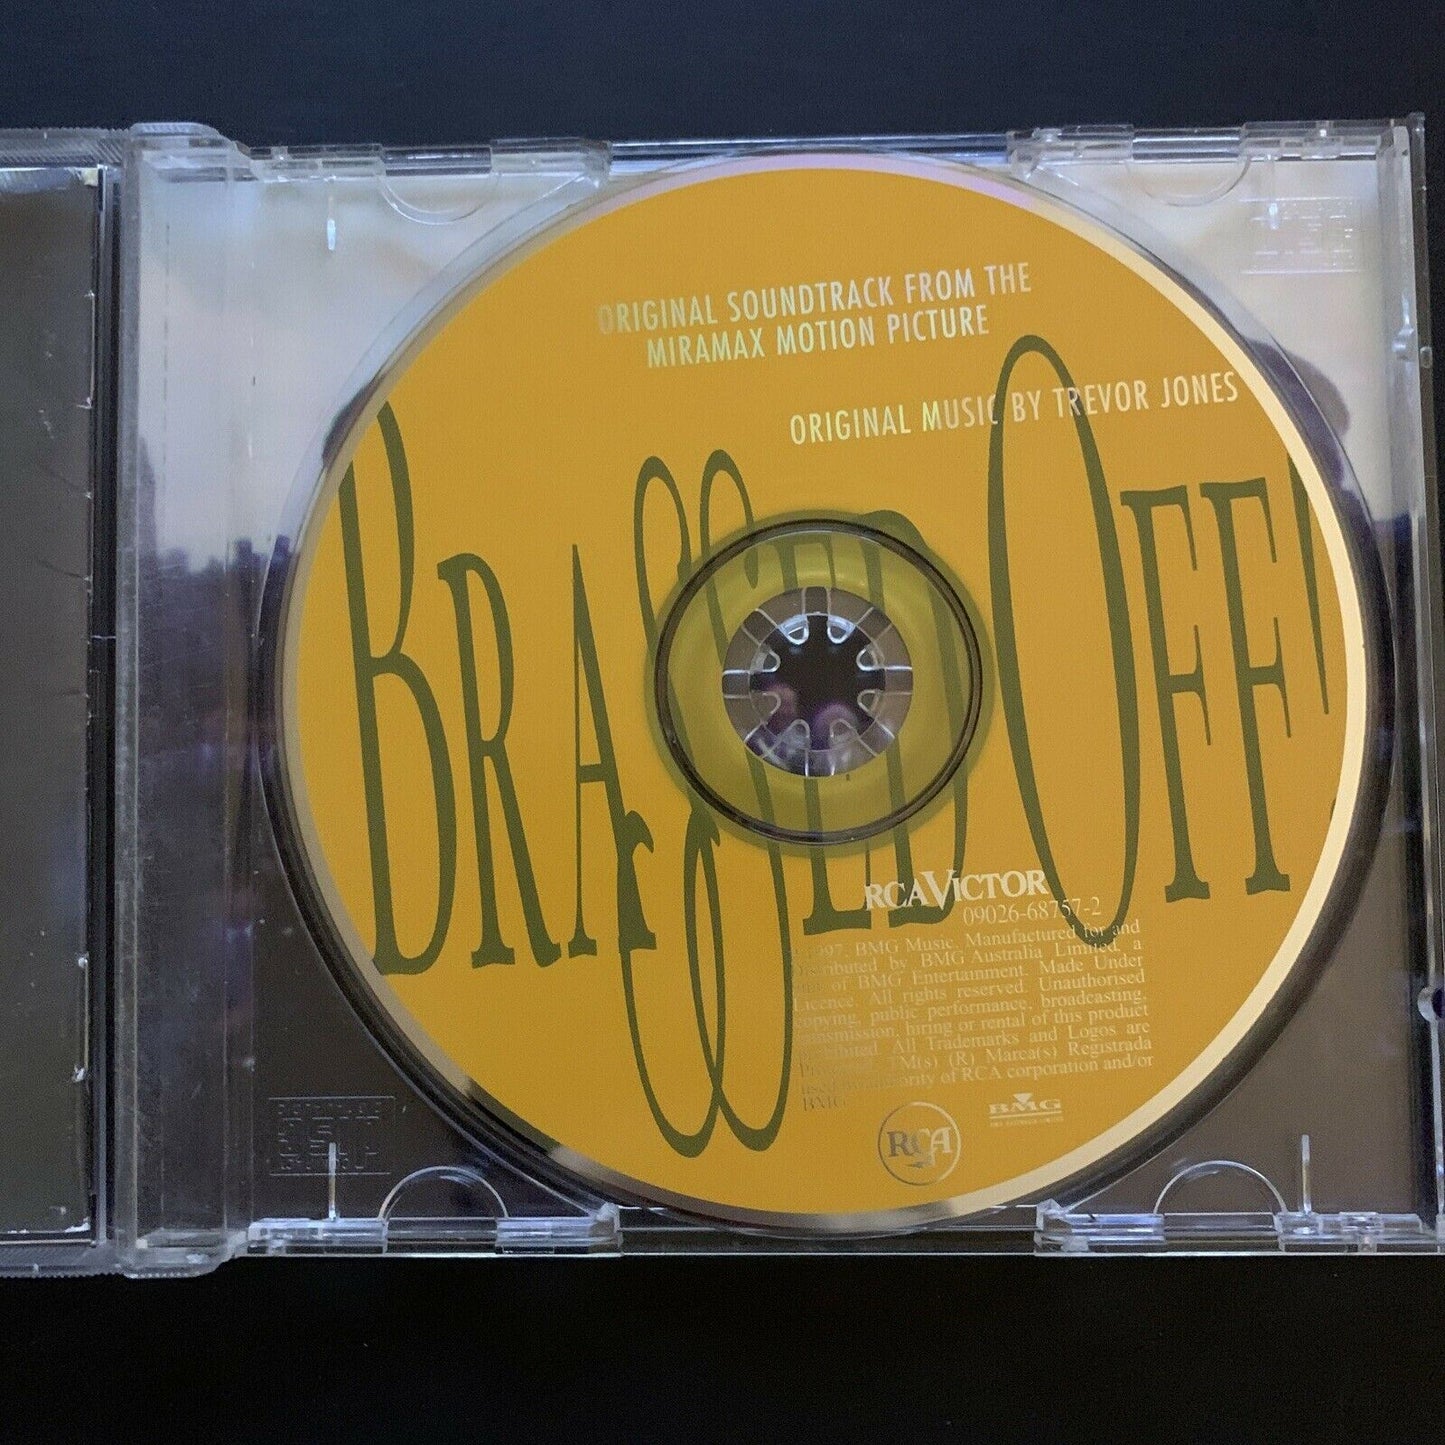 Brassed Off! - Original Motion Picture Soundtrack (CD, 1997)